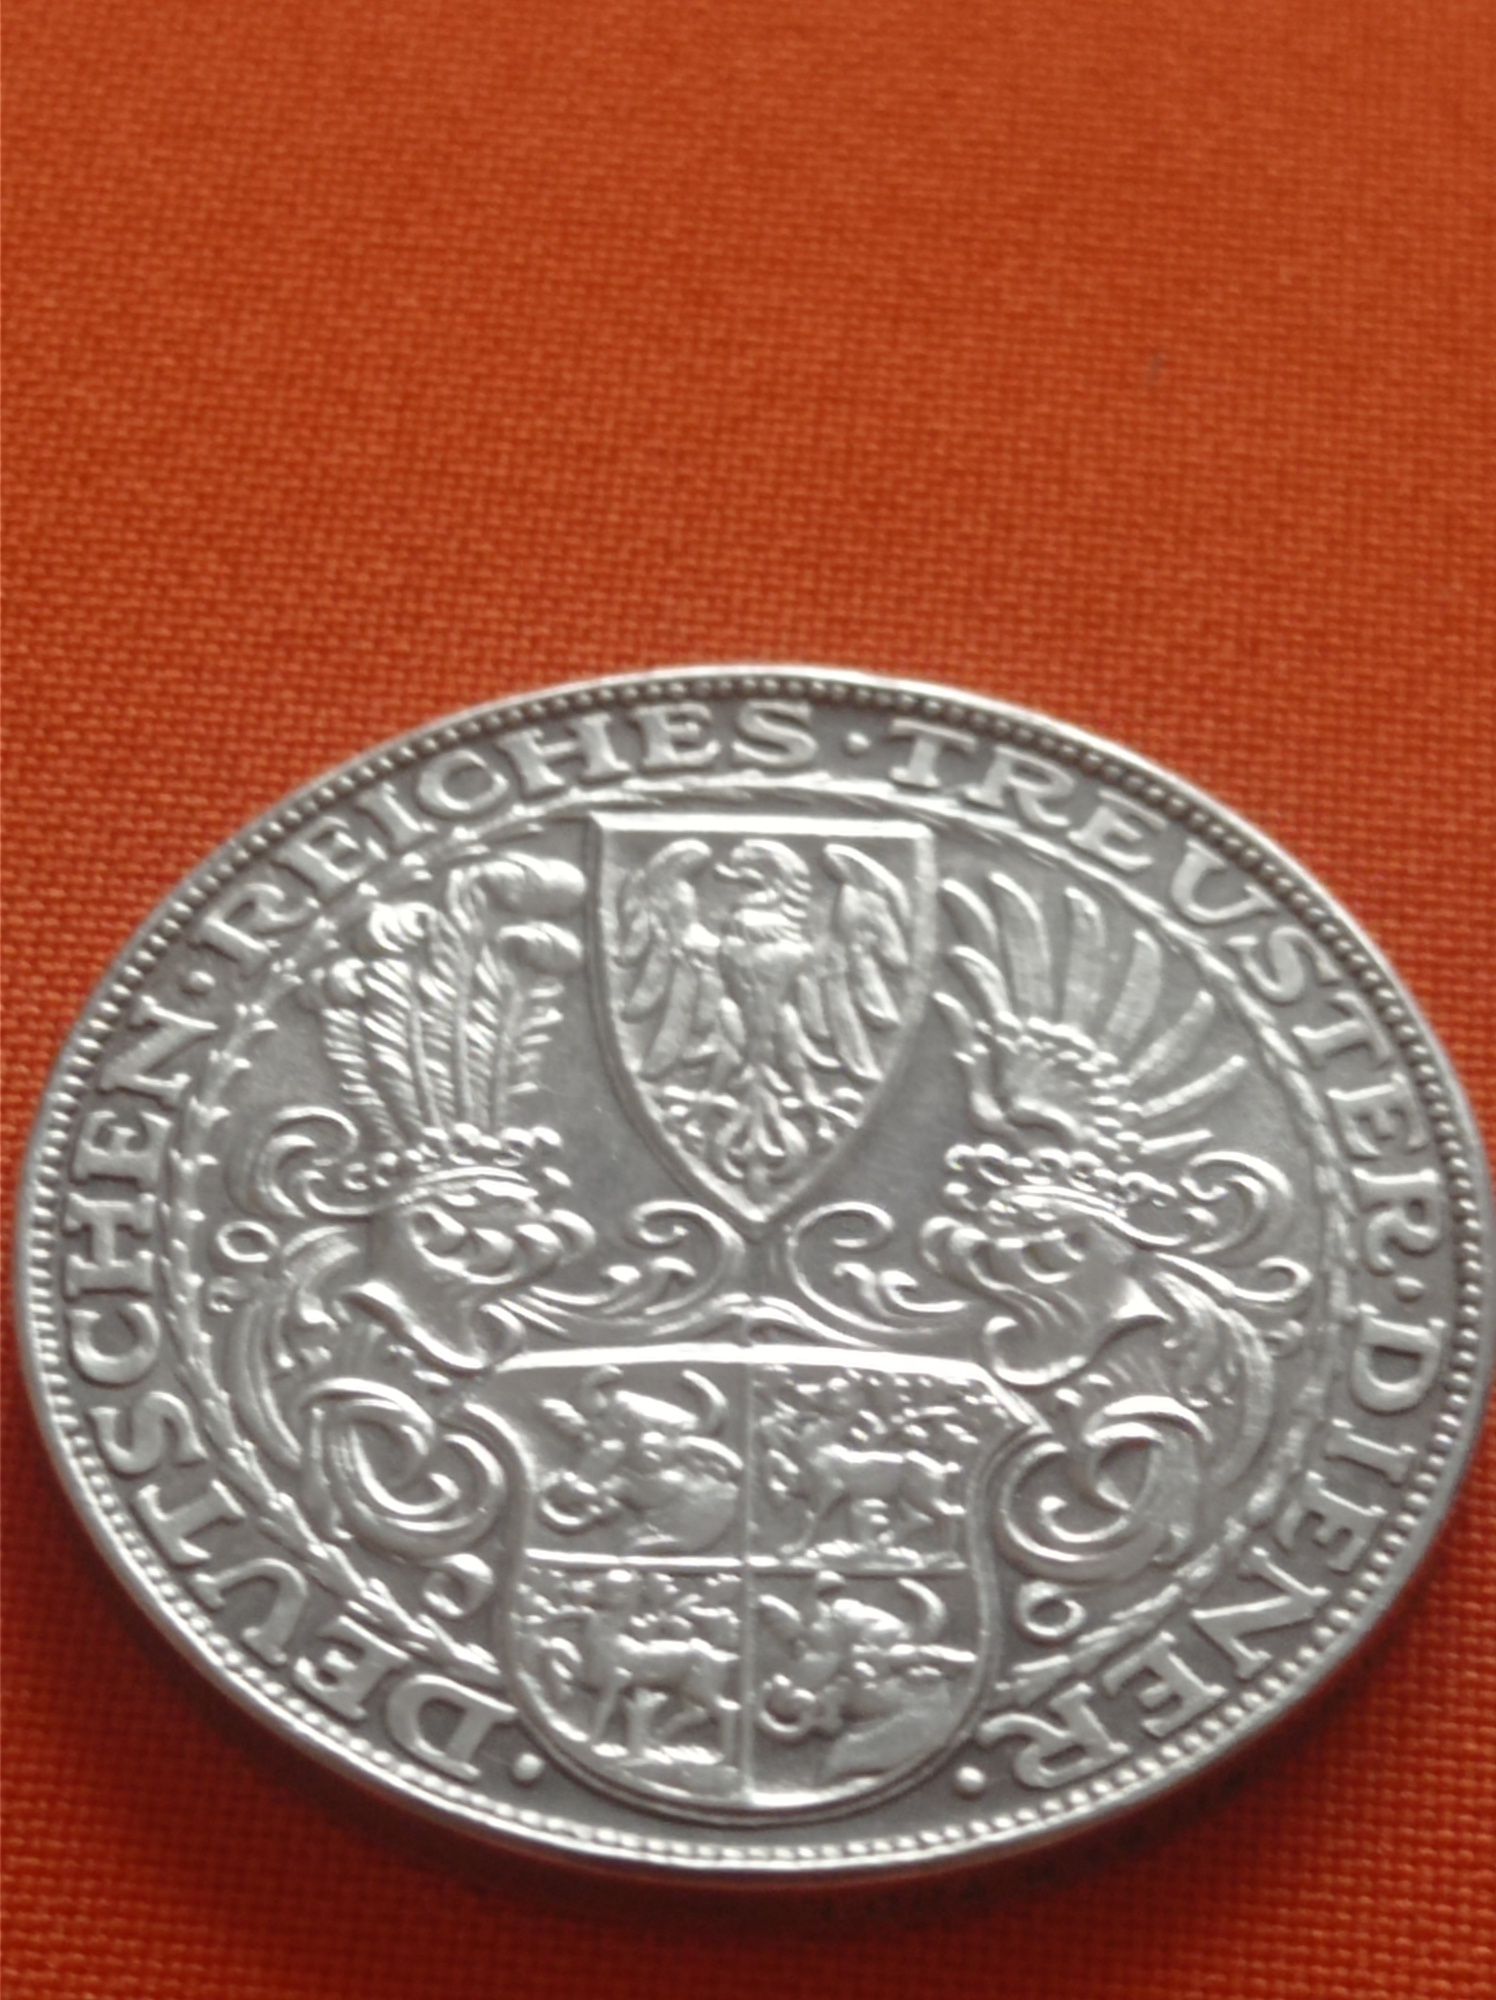 Серебряный монетовидный жетон 80 лет Гинденбургу